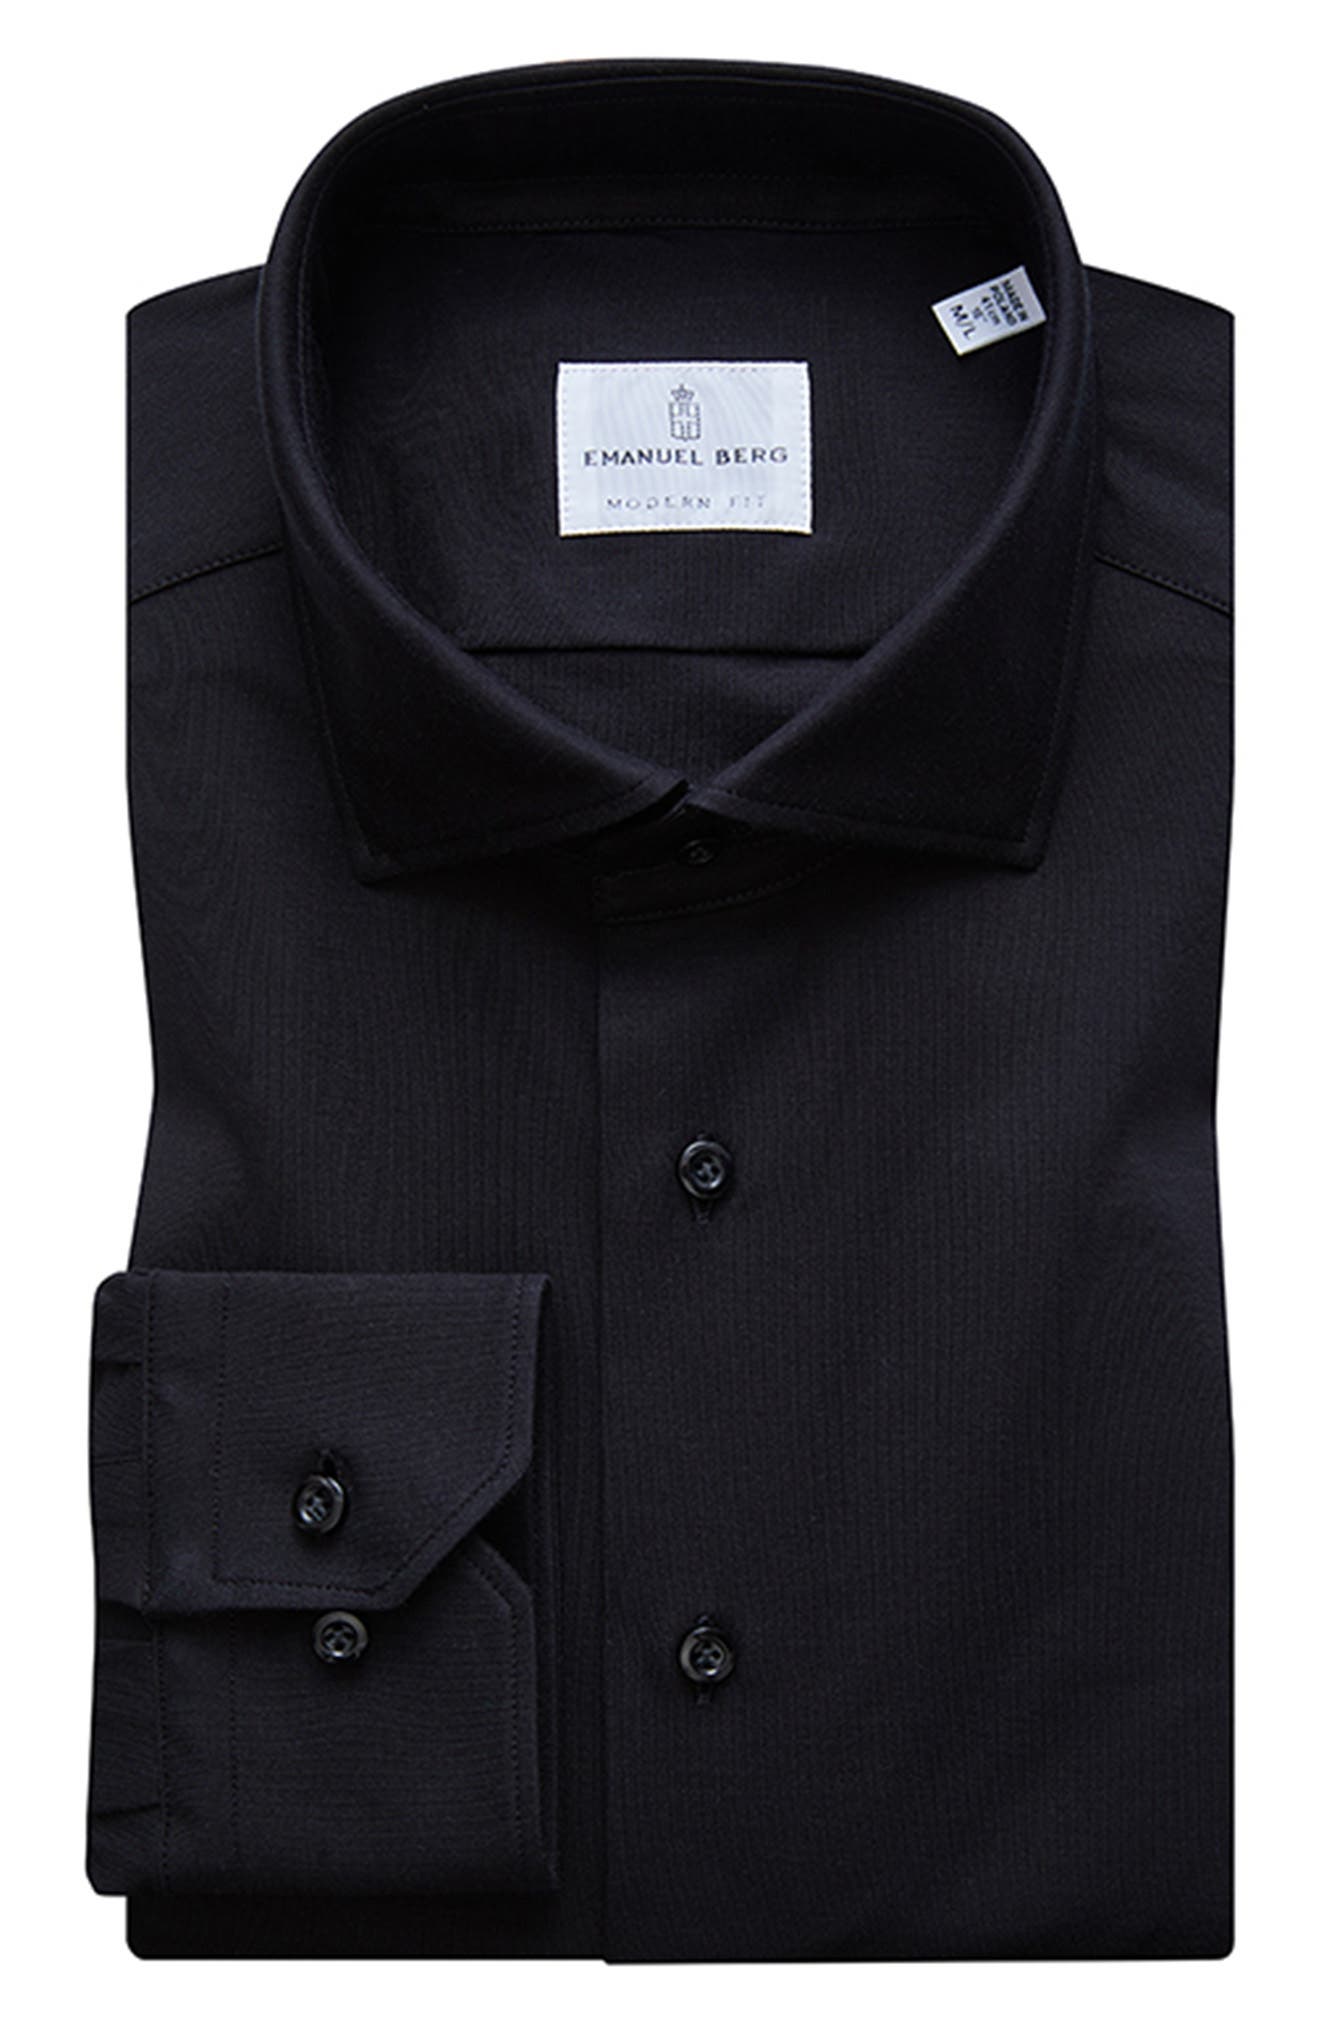 Emanuel Berg 4Flex Knit Modern Fit Long Sleeve Button-Up Shirt in Black at Nordstrom